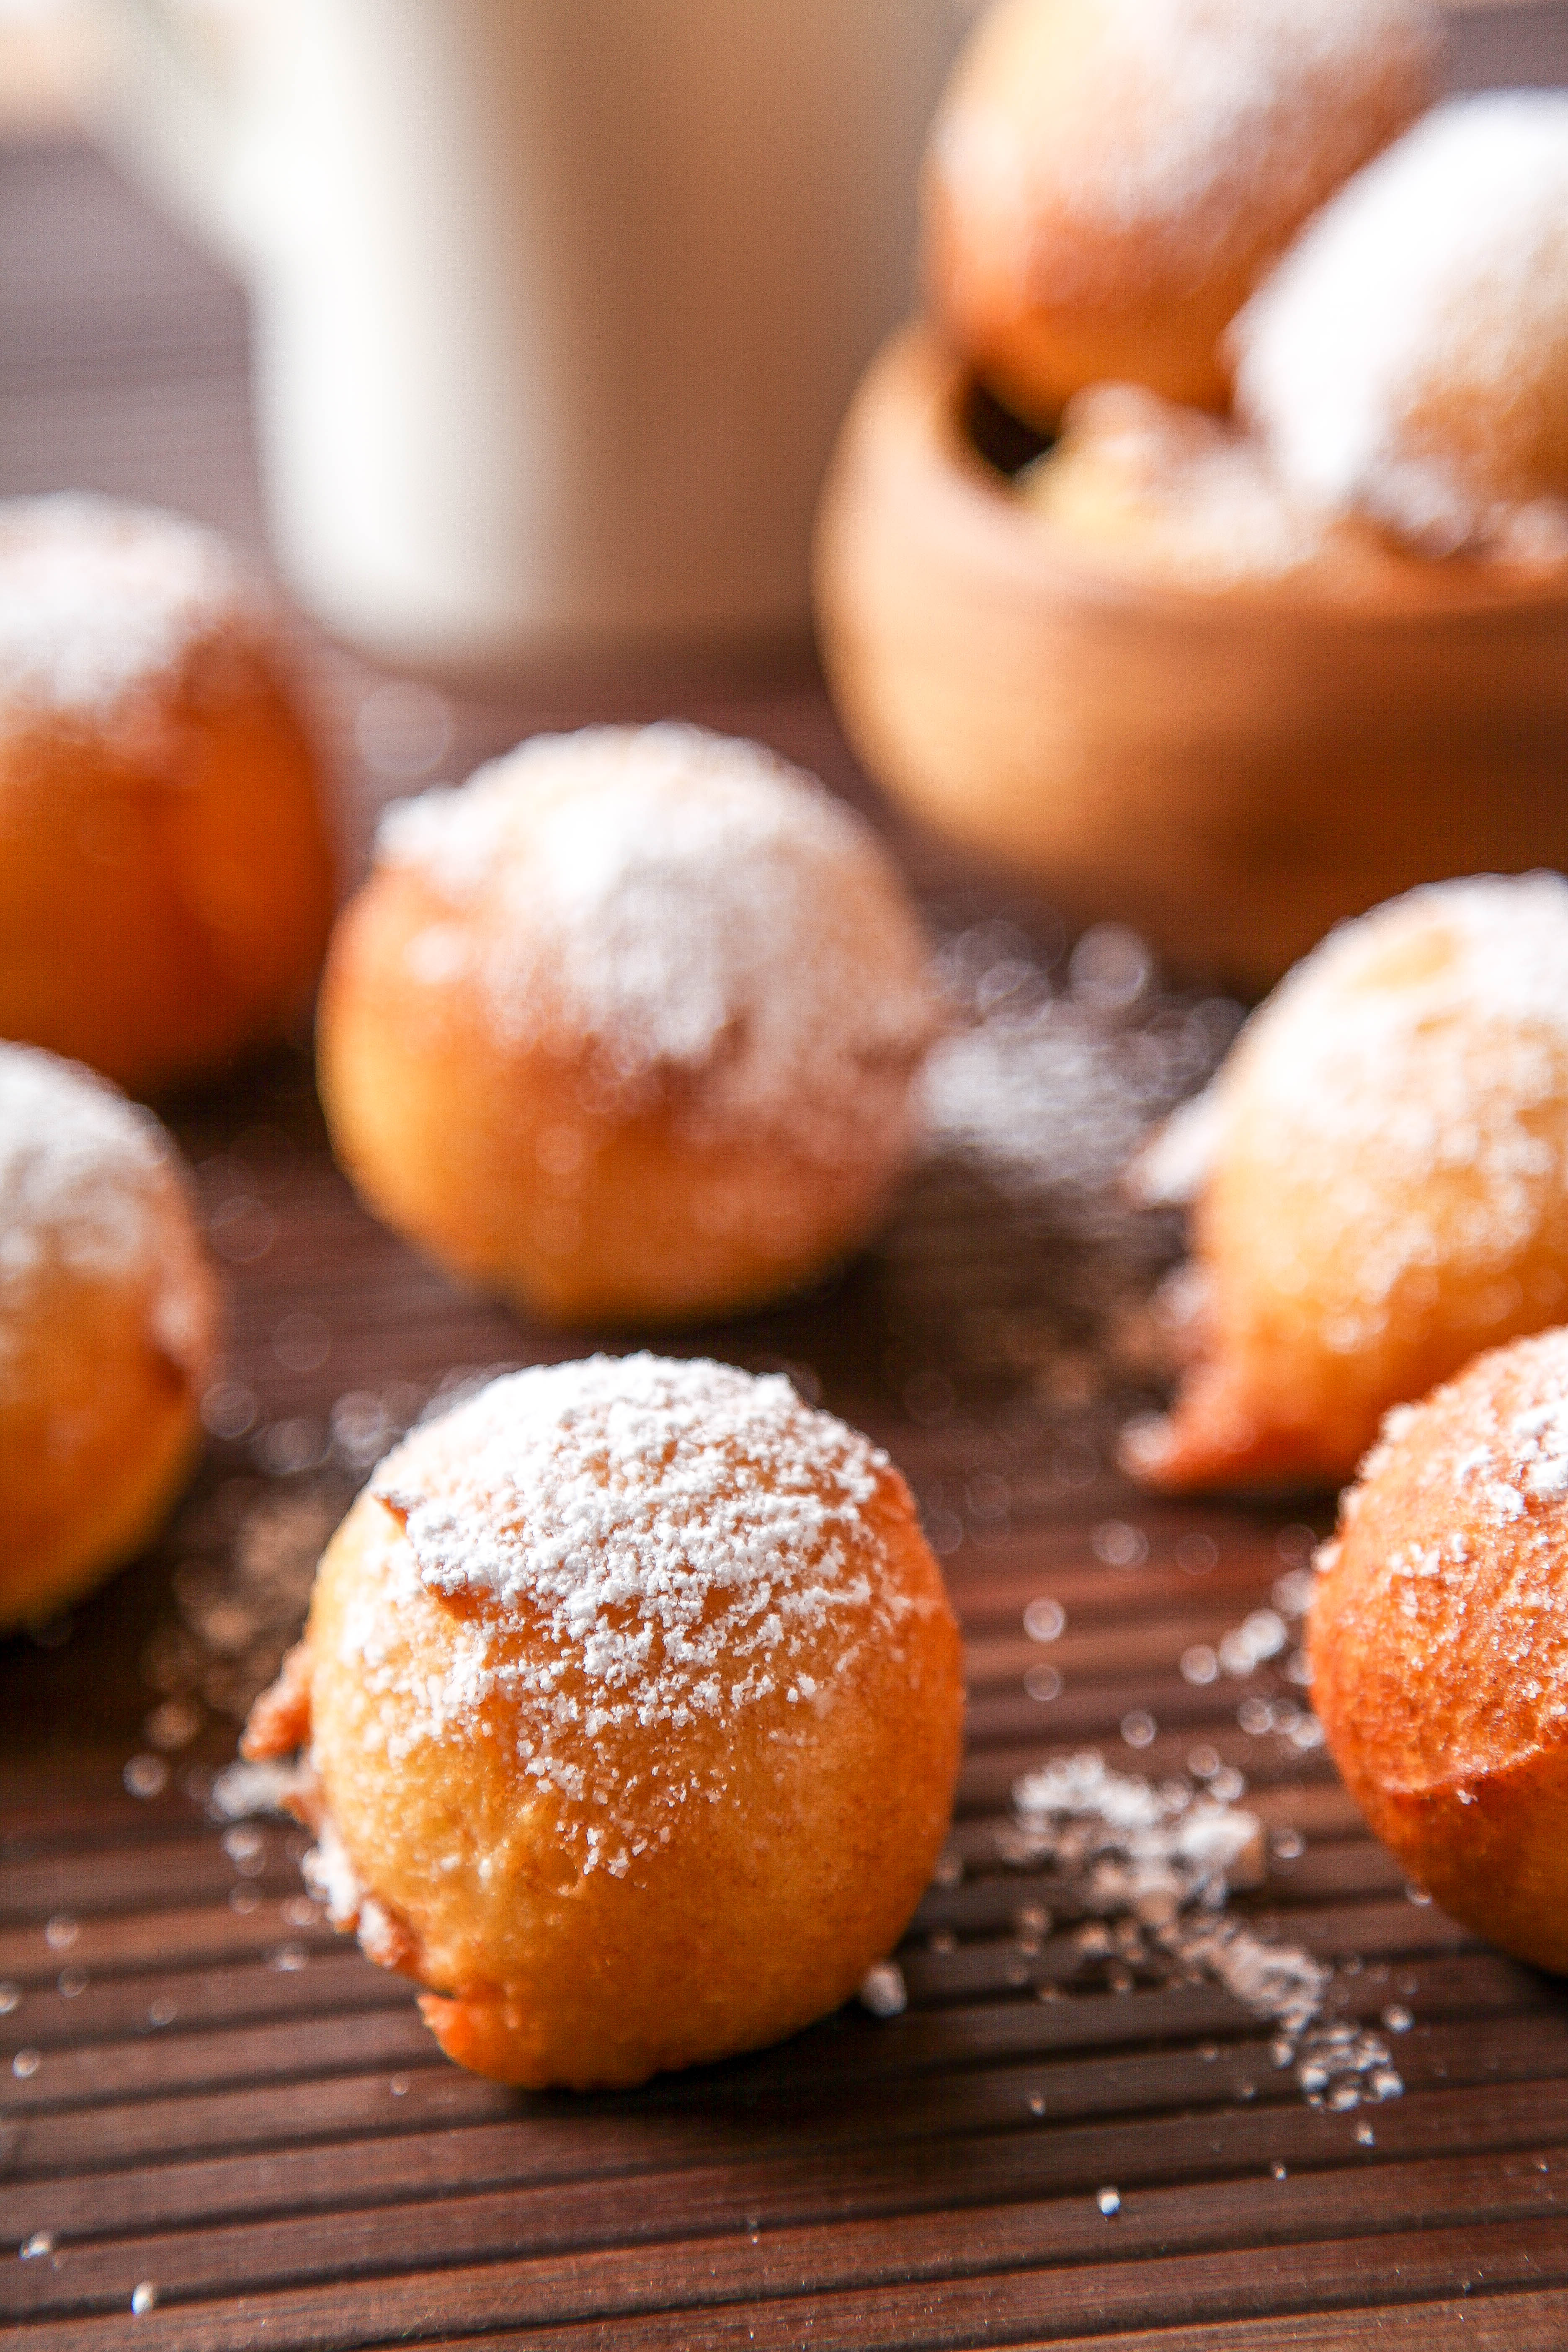 Light And Fluffy Zeppole Addictive Italian Doughnut Holes